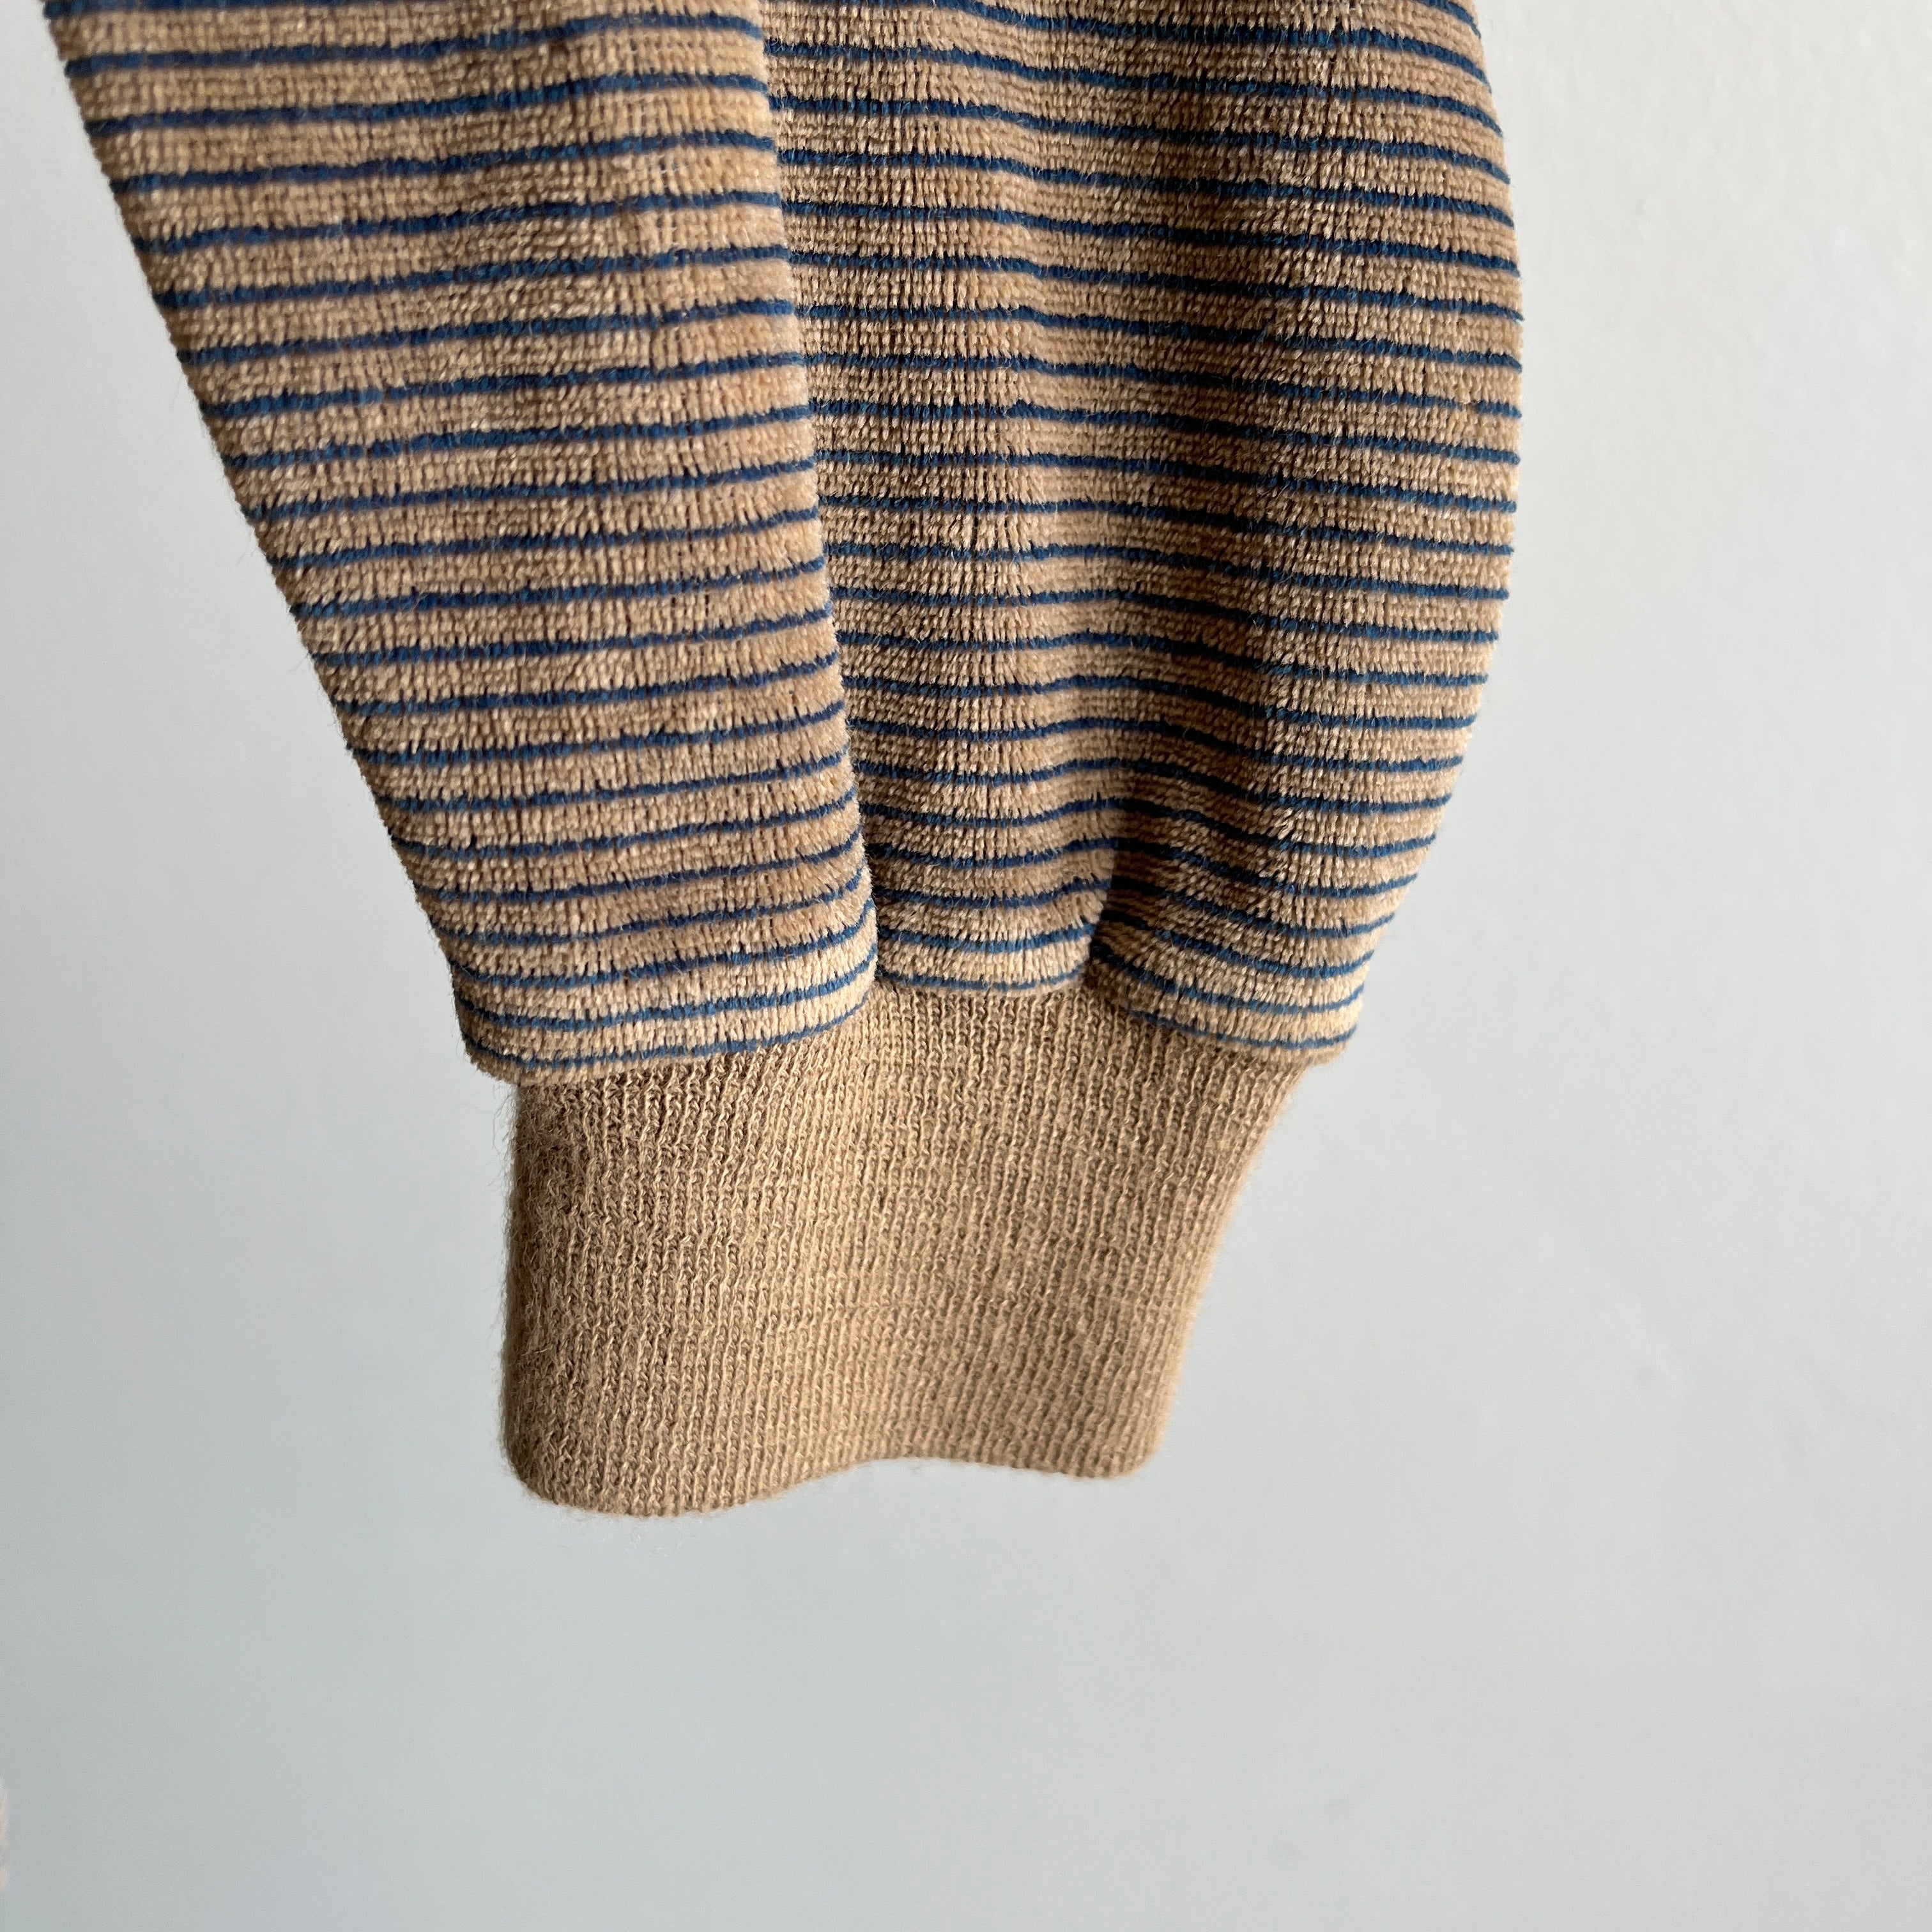 1980s Striped Velour Long Sleeve Polo Sweatshirt/Shirt